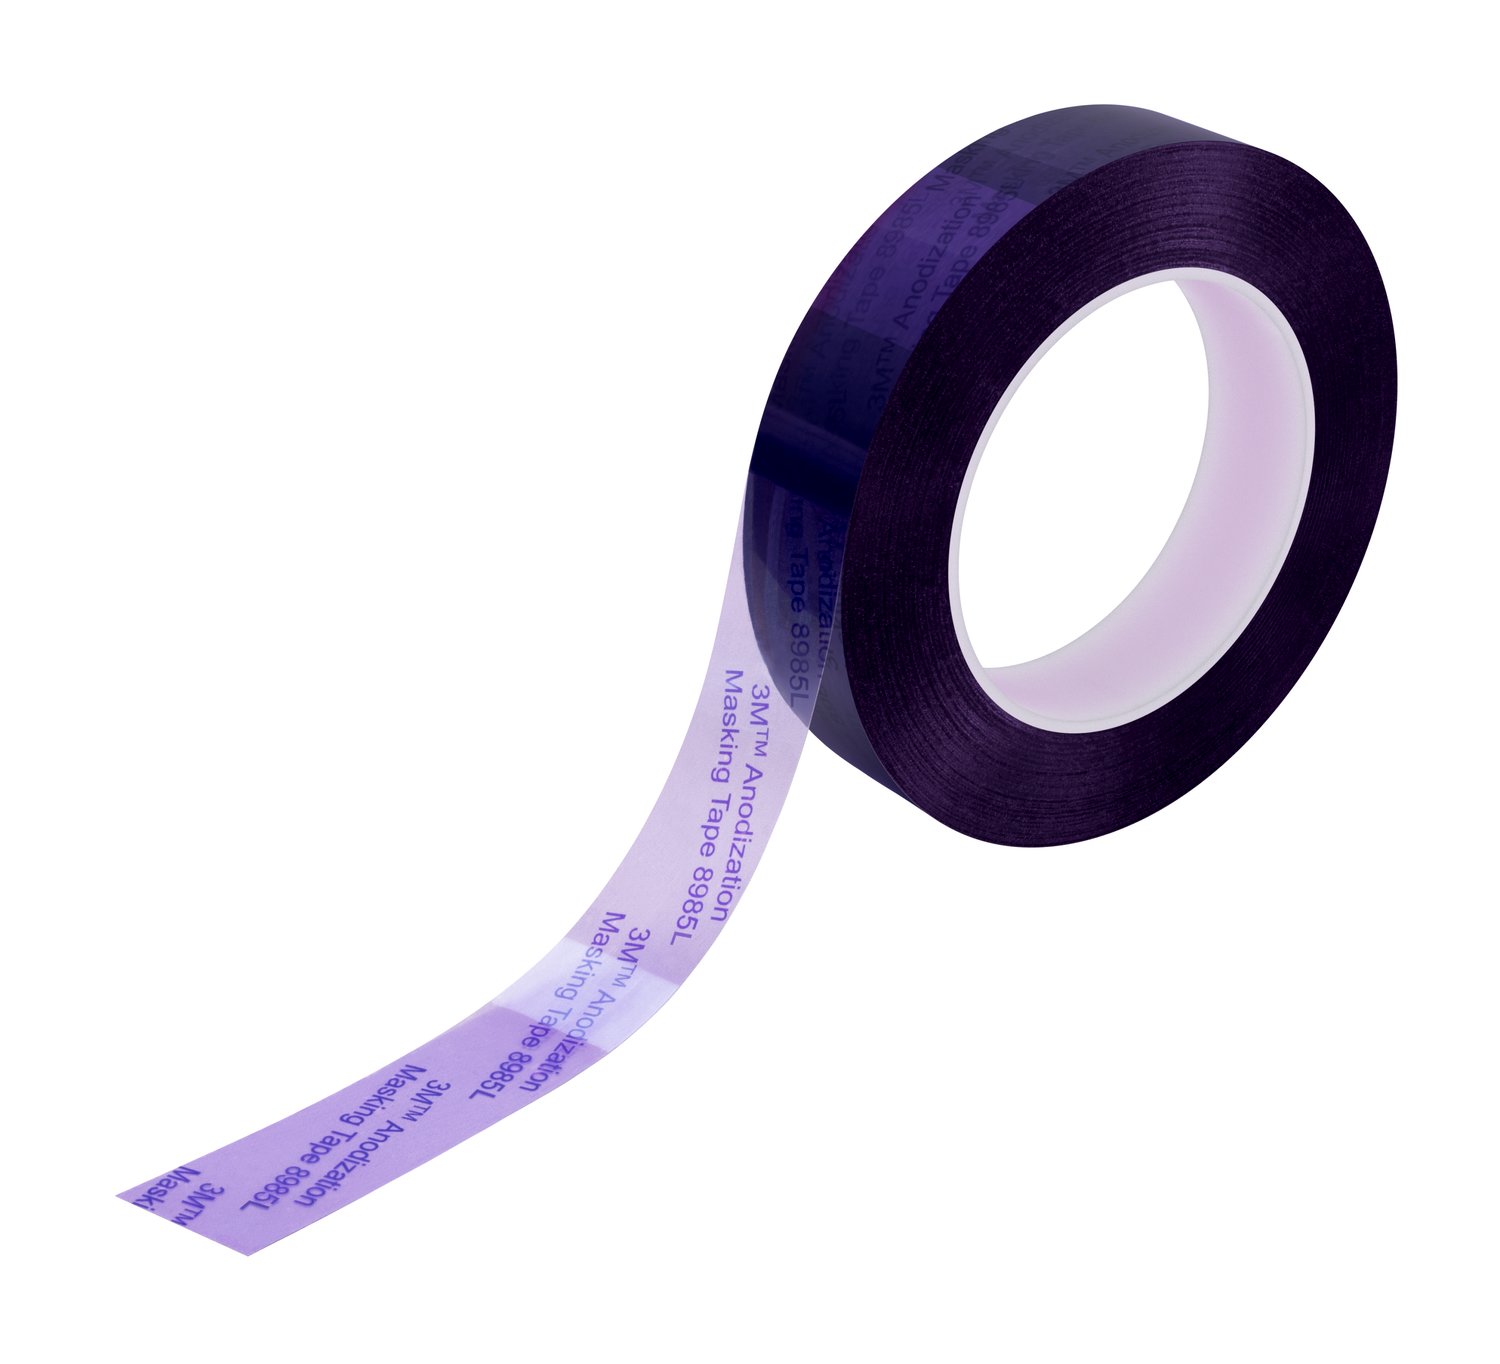 7100207277 - 3M Anodization Masking Tape 8985L, Purple, 2 in x 72 yd, 24 rolls per
case